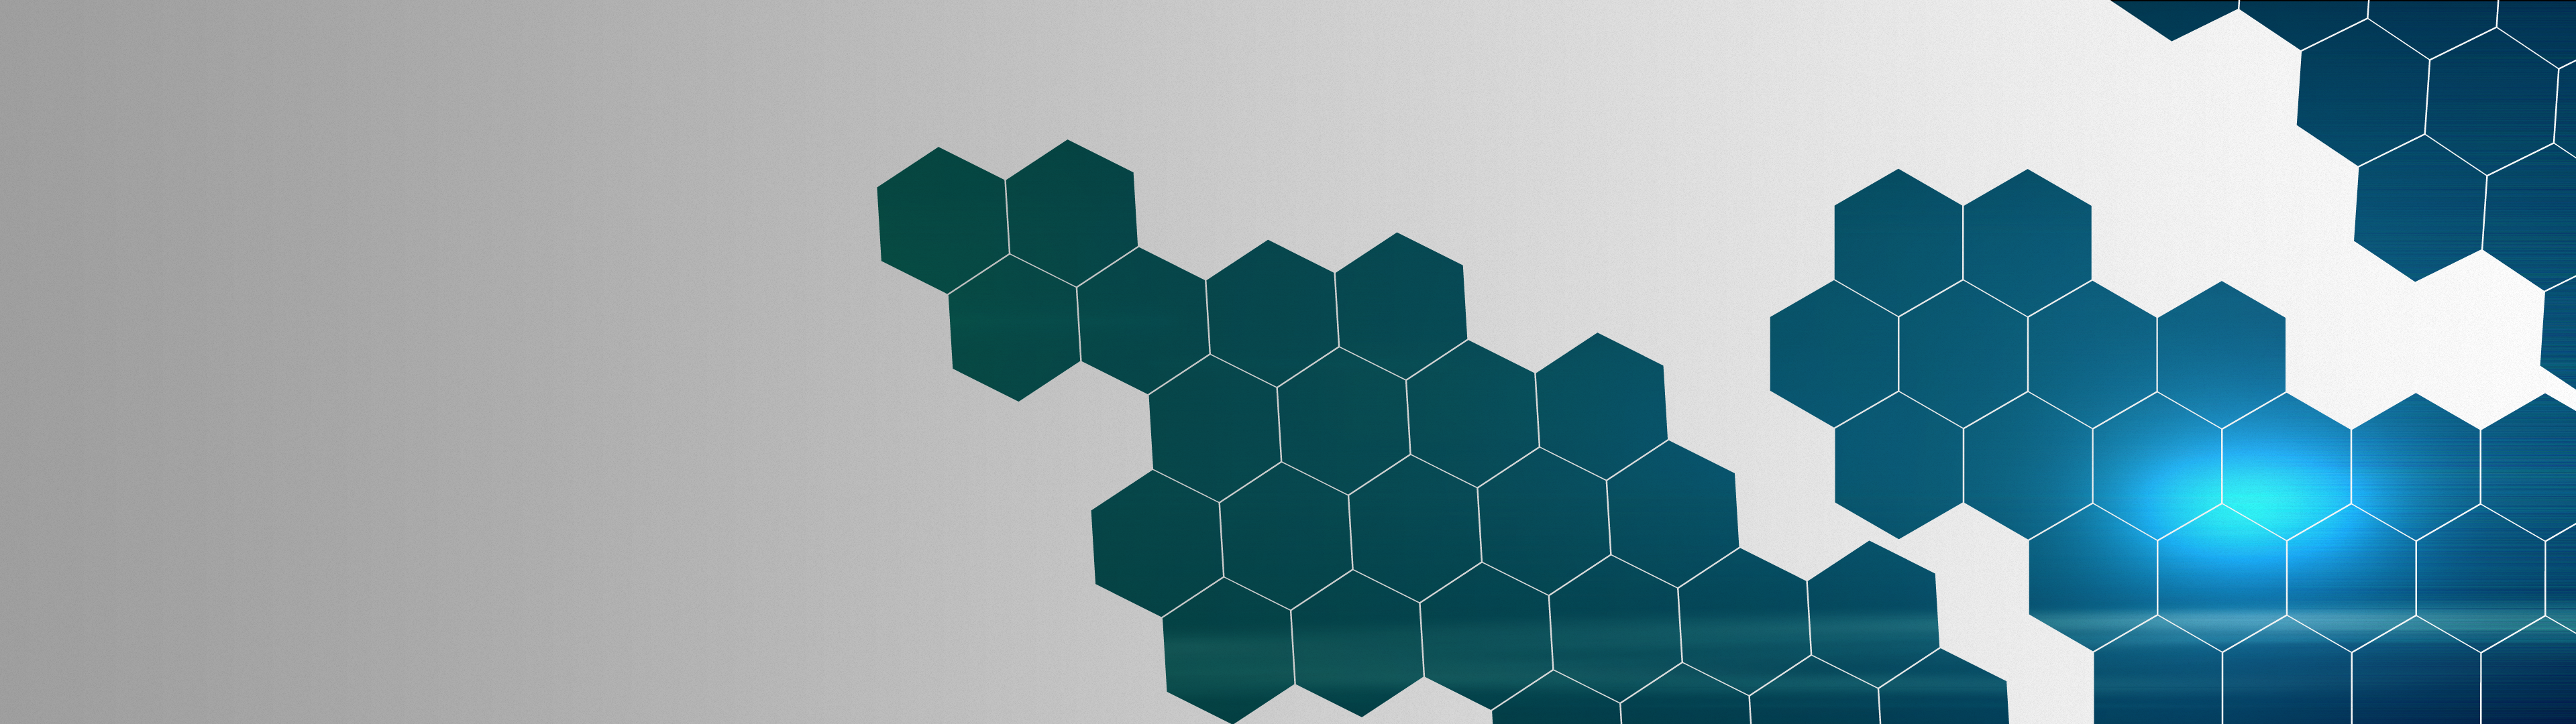 Hexagonal X By Markwester Customization Wallpaper